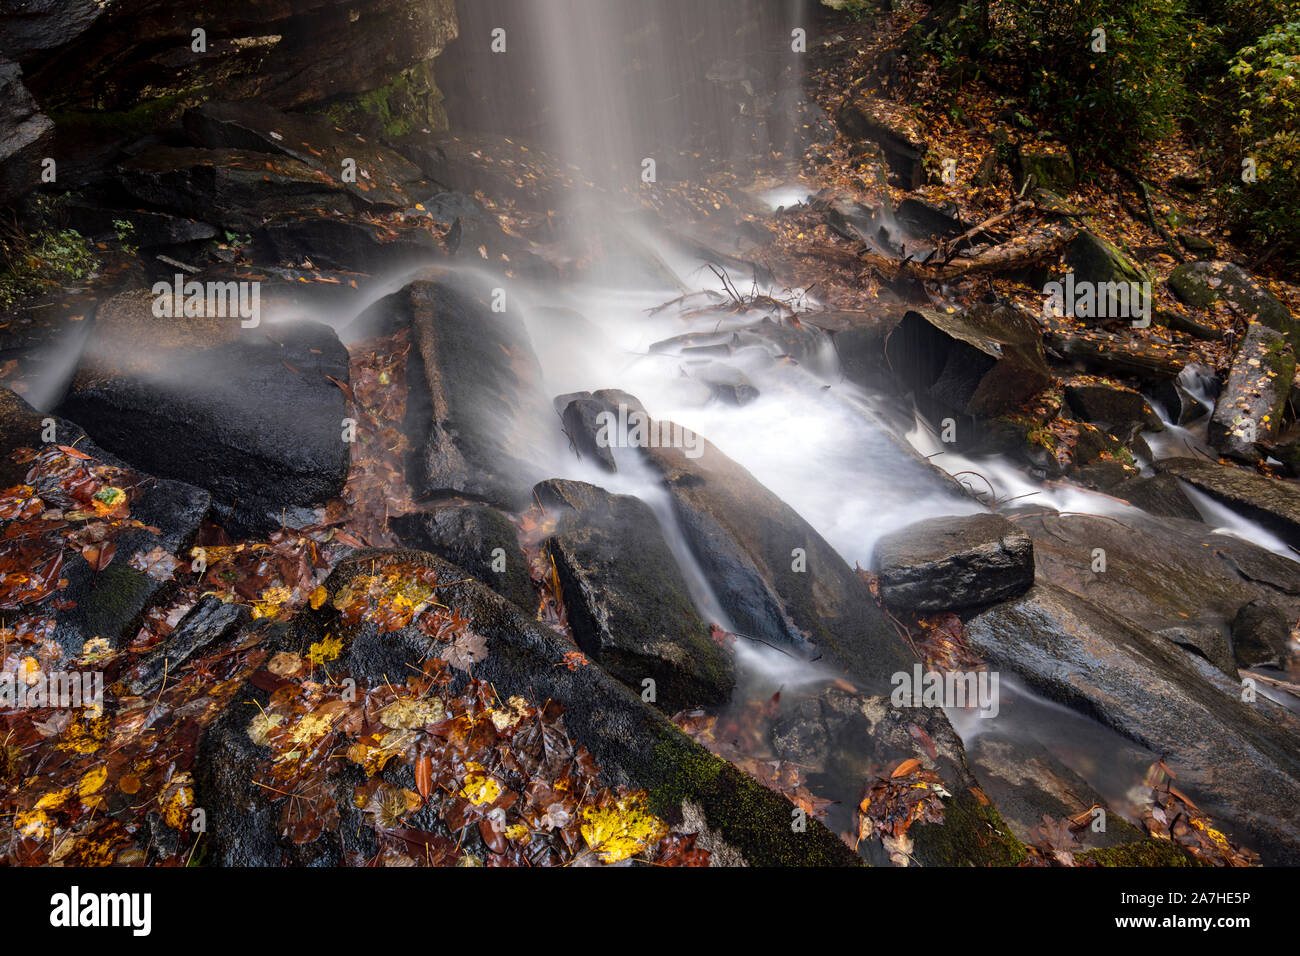 Détails de l'eau et de la roche à Slick Rock Falls - Pisgah National Forest, Brevard, North Carolina, USA Banque D'Images